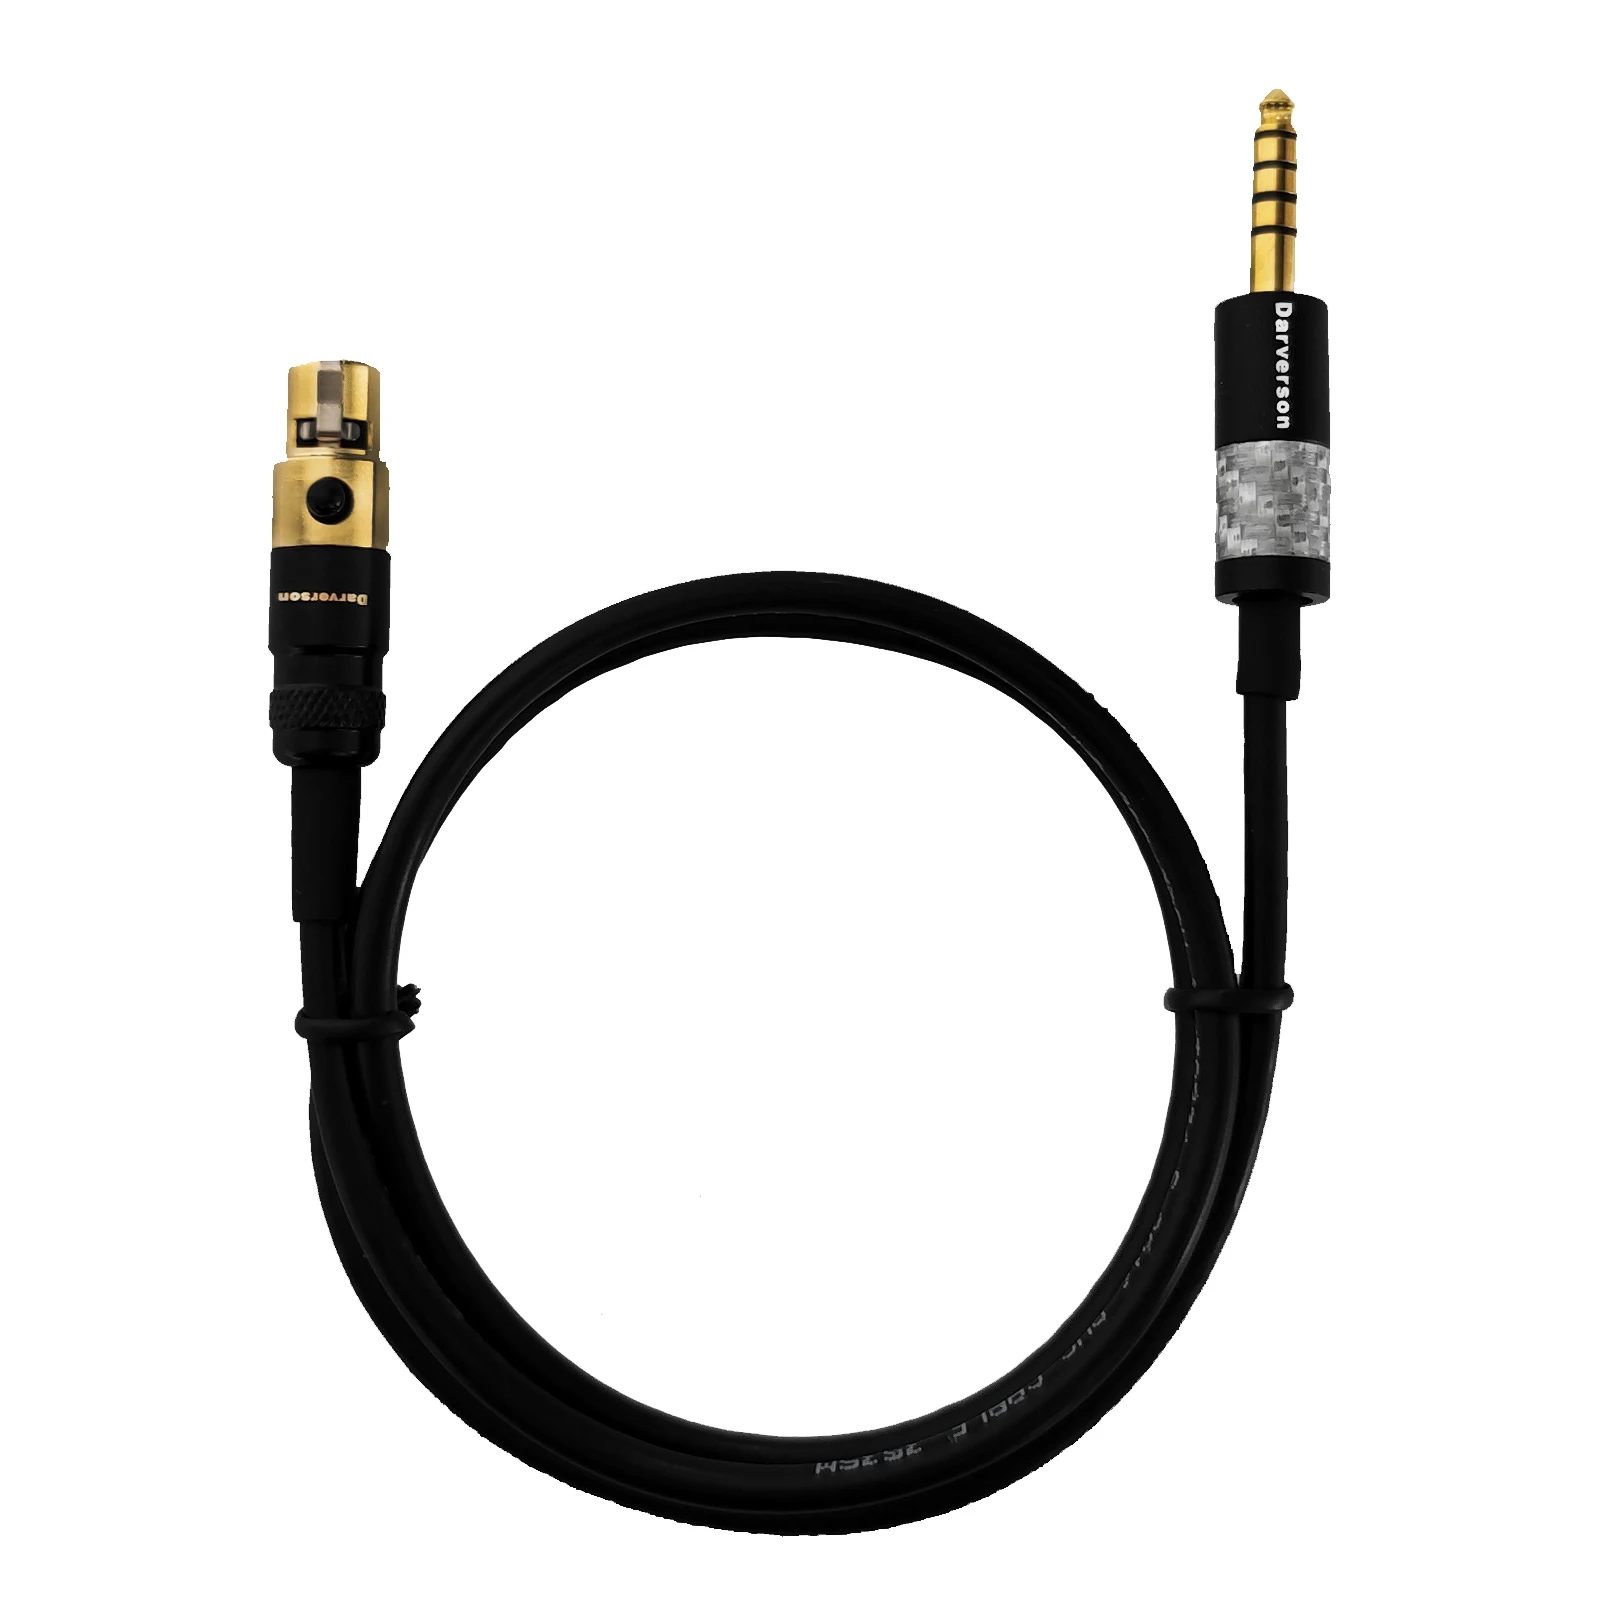 AKG Headphone Cable Mini xlr to 4.4mm 4-pin xlr Wire Good For K240 K240S K240MK II K141 K171 K181 Q701 K702 K712 PRO K271s K271